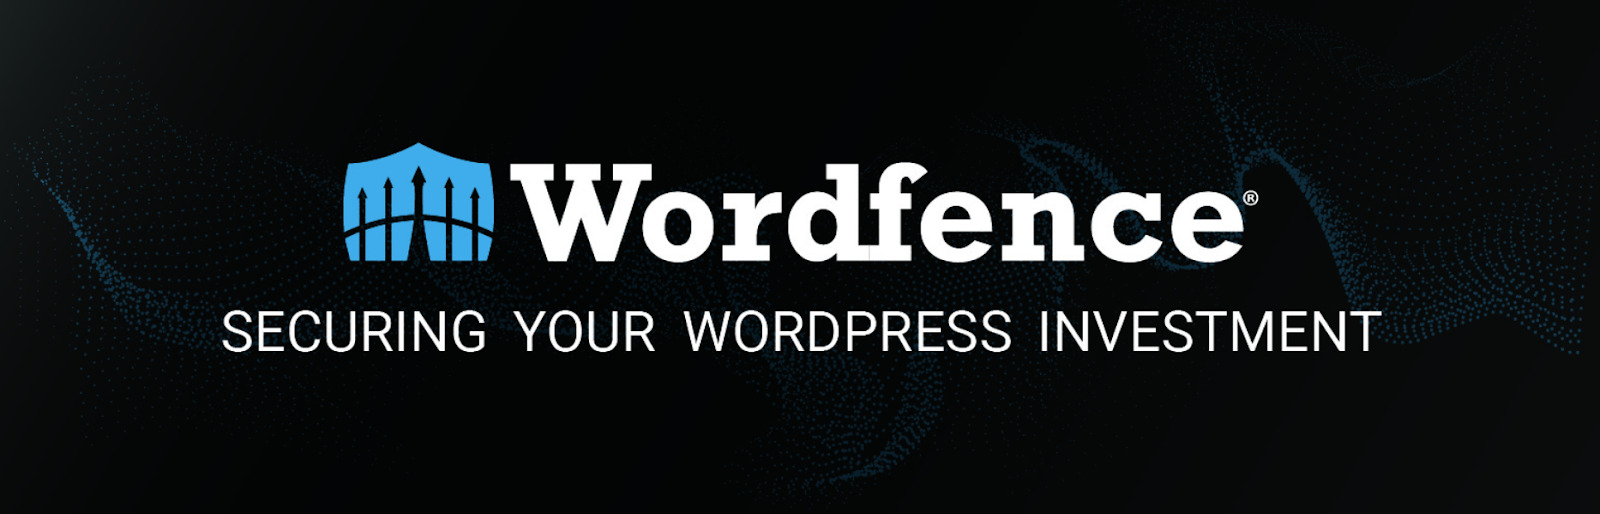 best wordpress plugins for marketers: wordfence